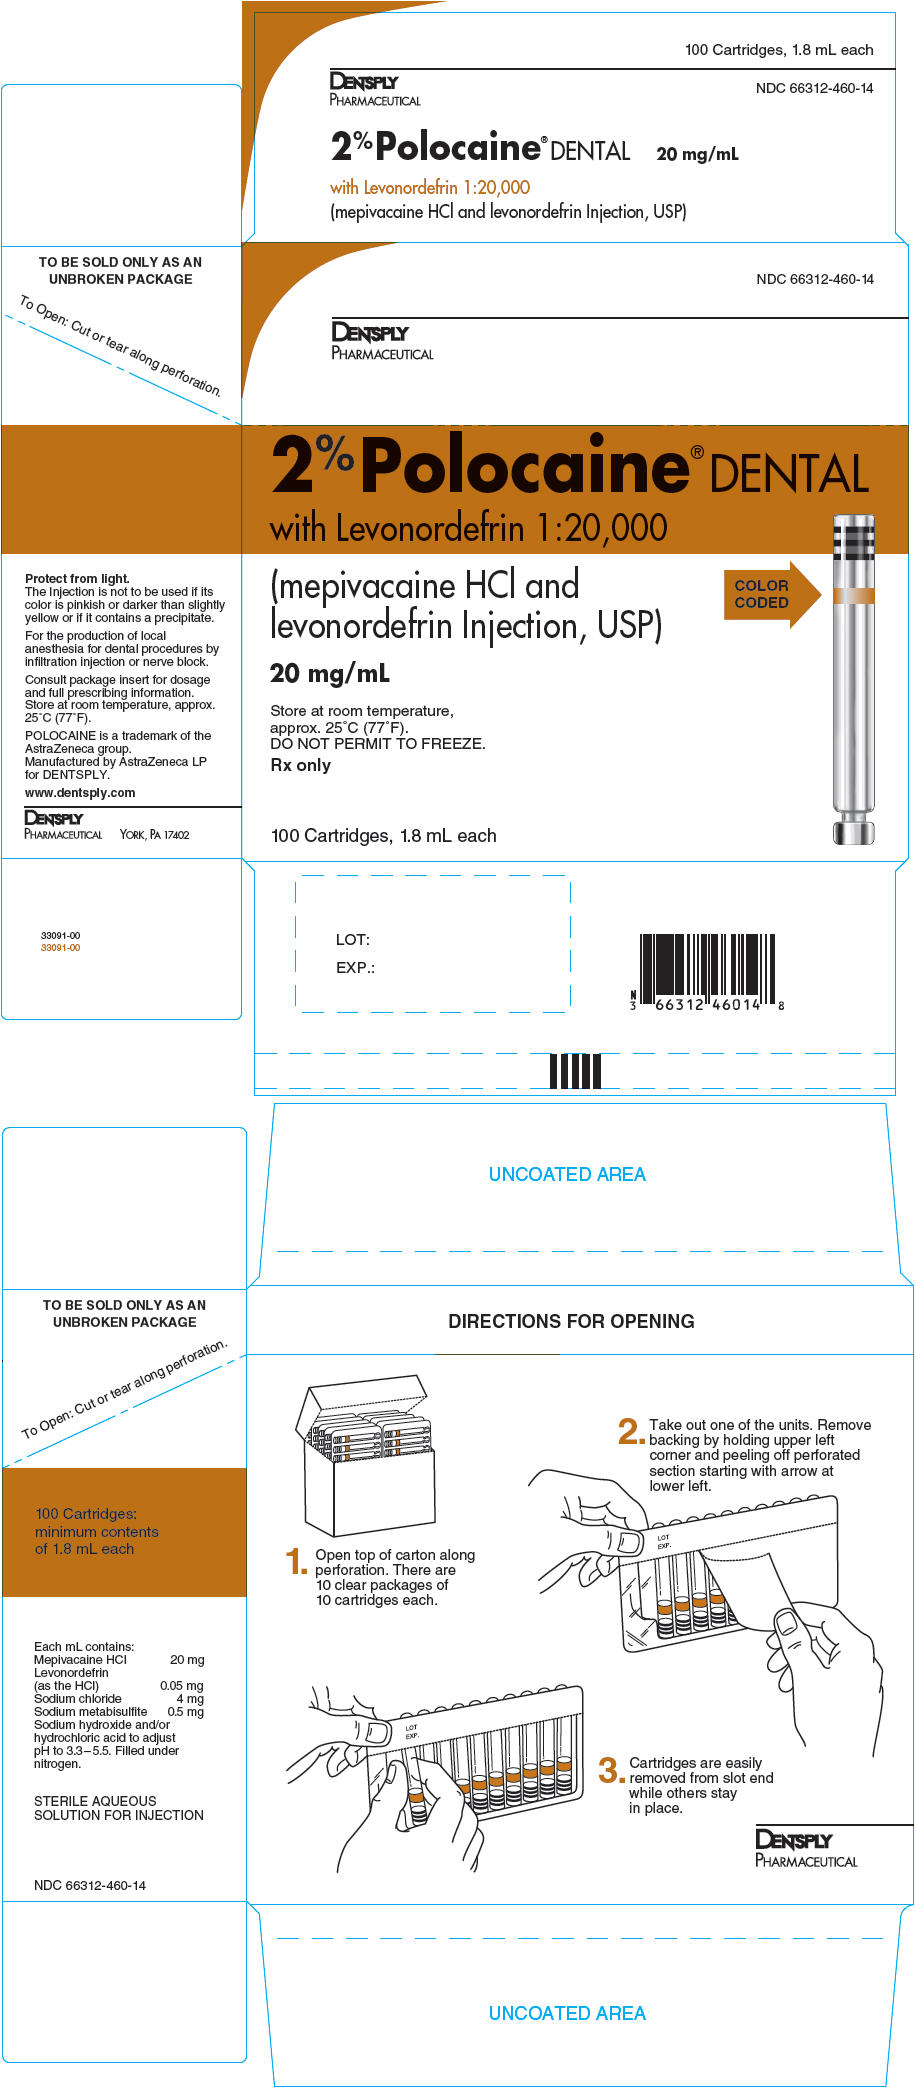 PRINCIPAL DISPLAY PANEL - 20 mg/mL Cartridge Carton